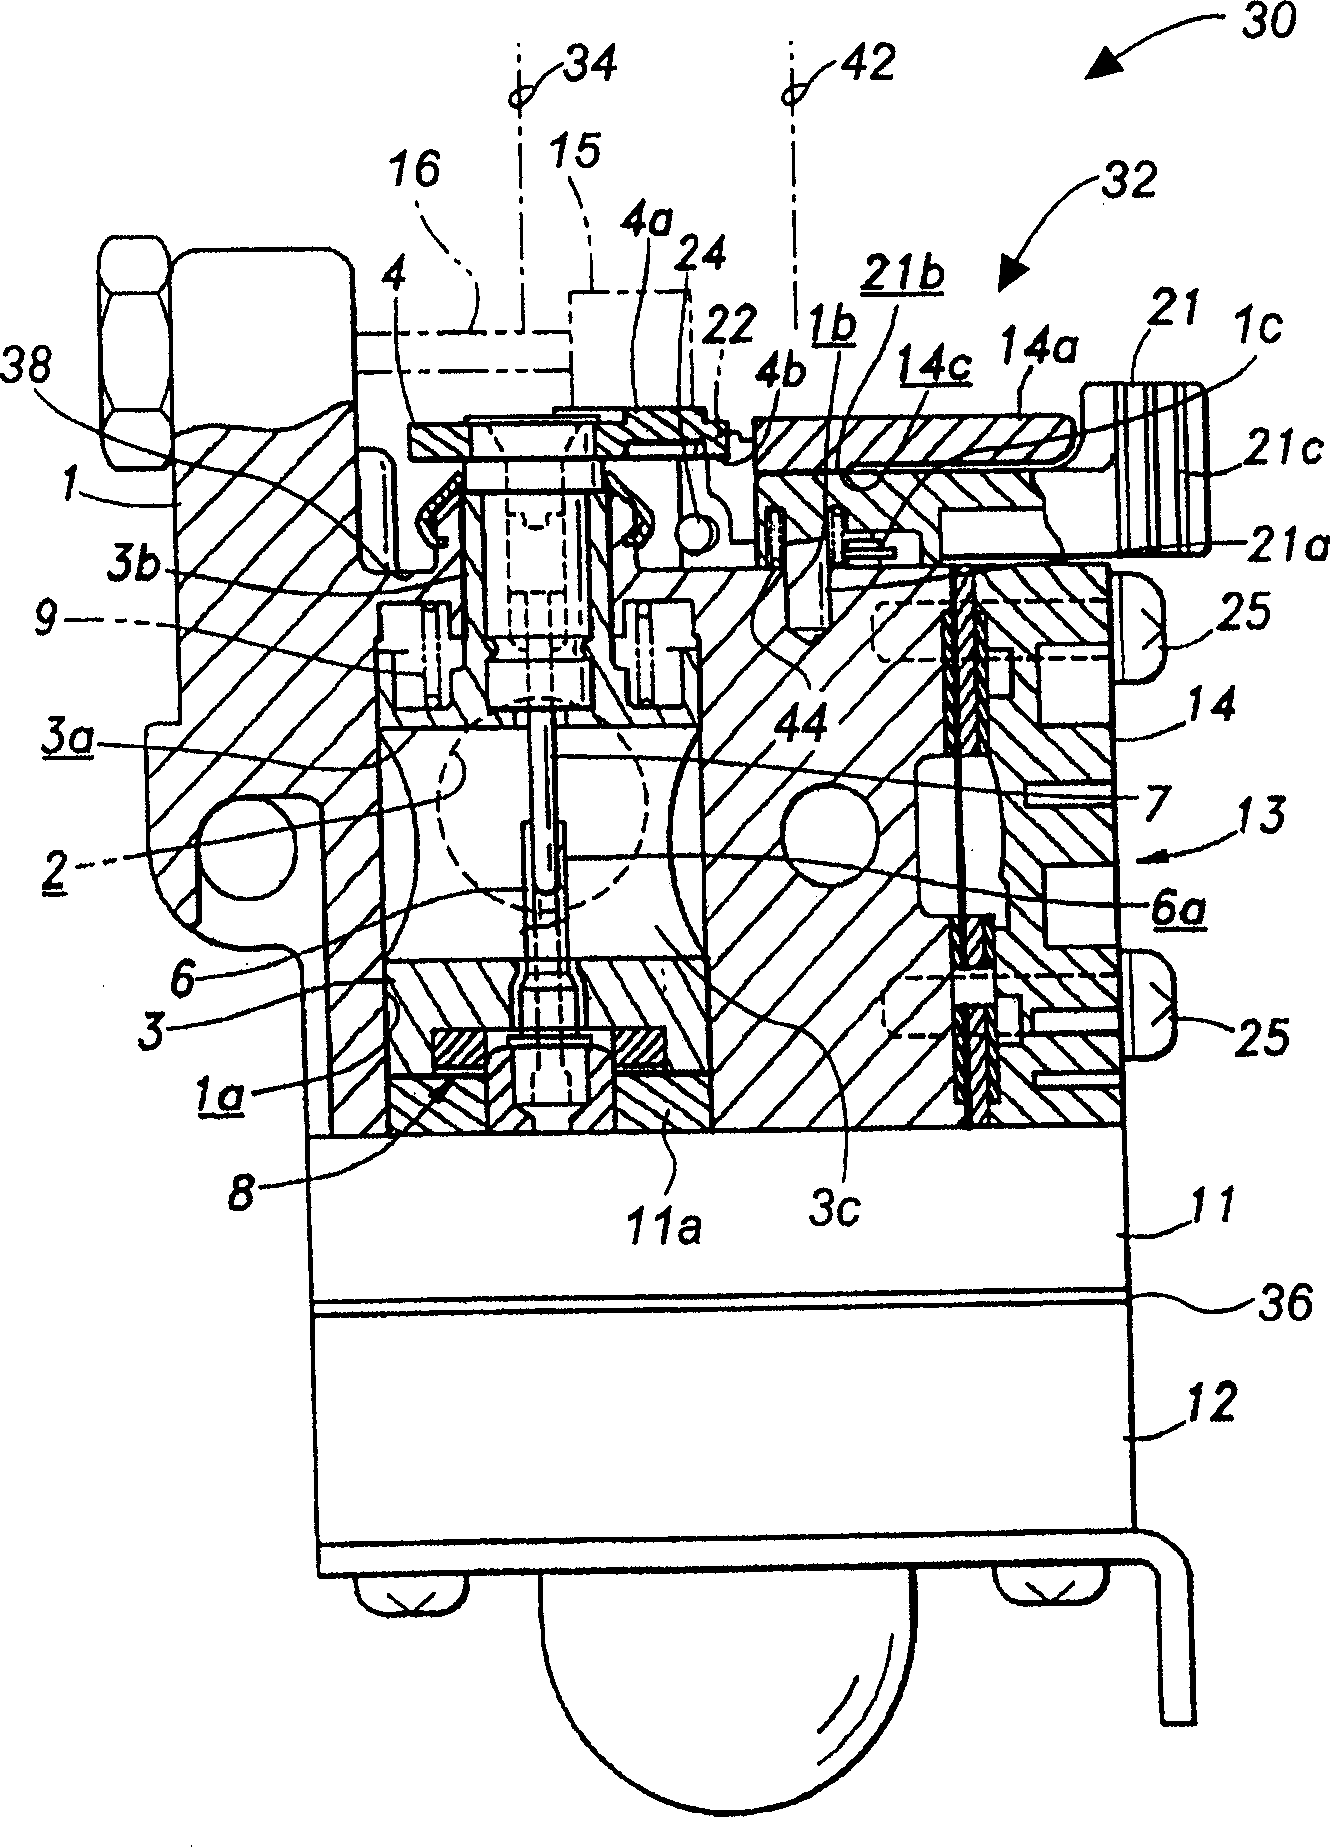 Engine start device of a rotary valve carburetor